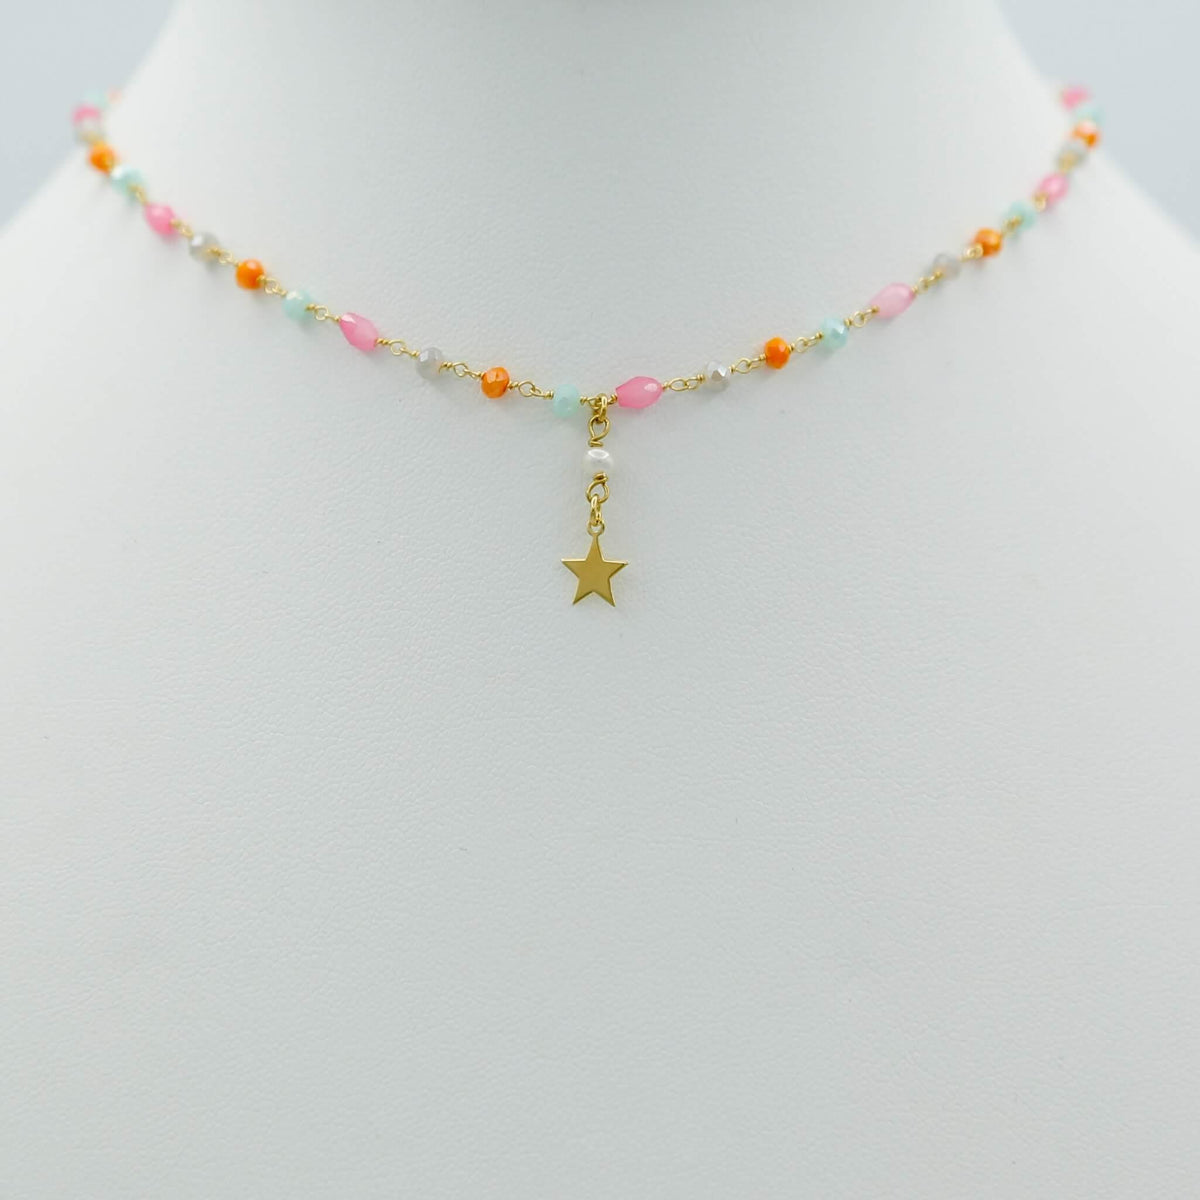 Multicolor Beads Choker with Pendant Star - Vita Isola